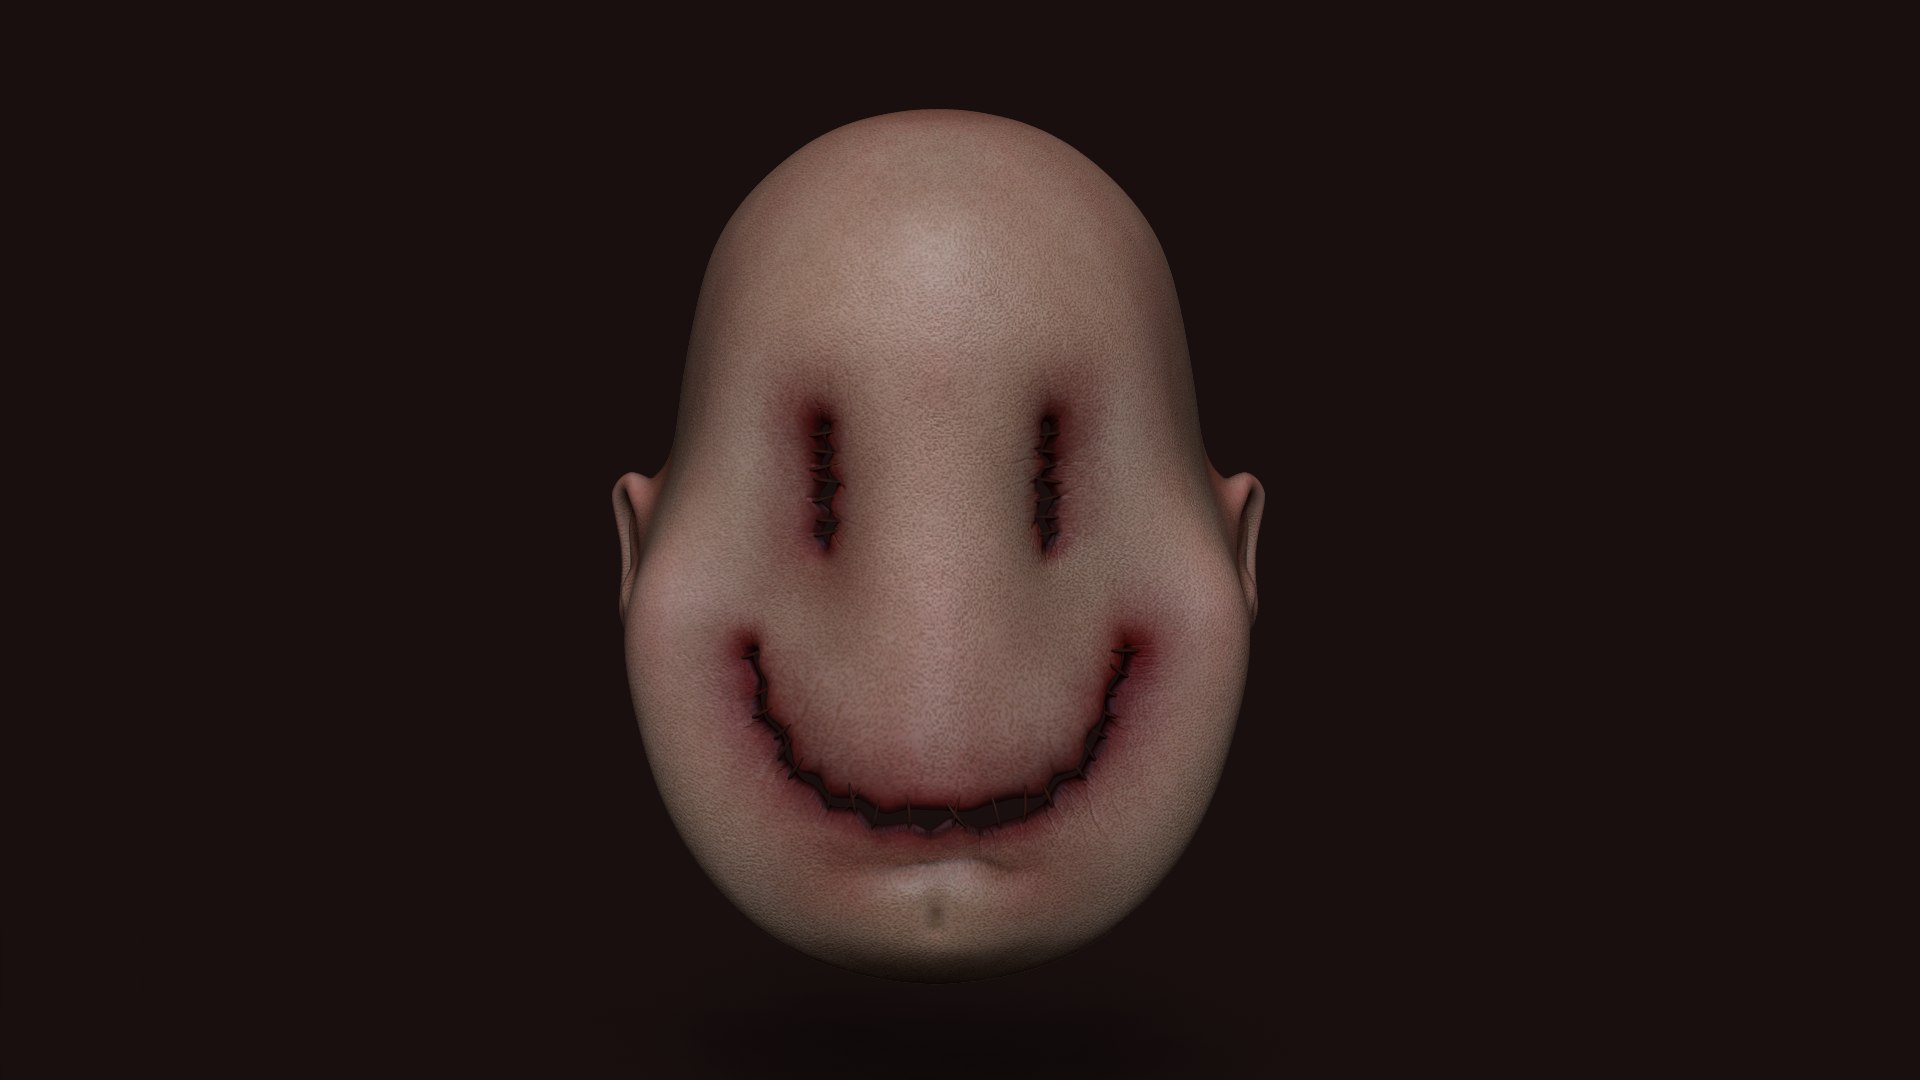 Smiling creepy face